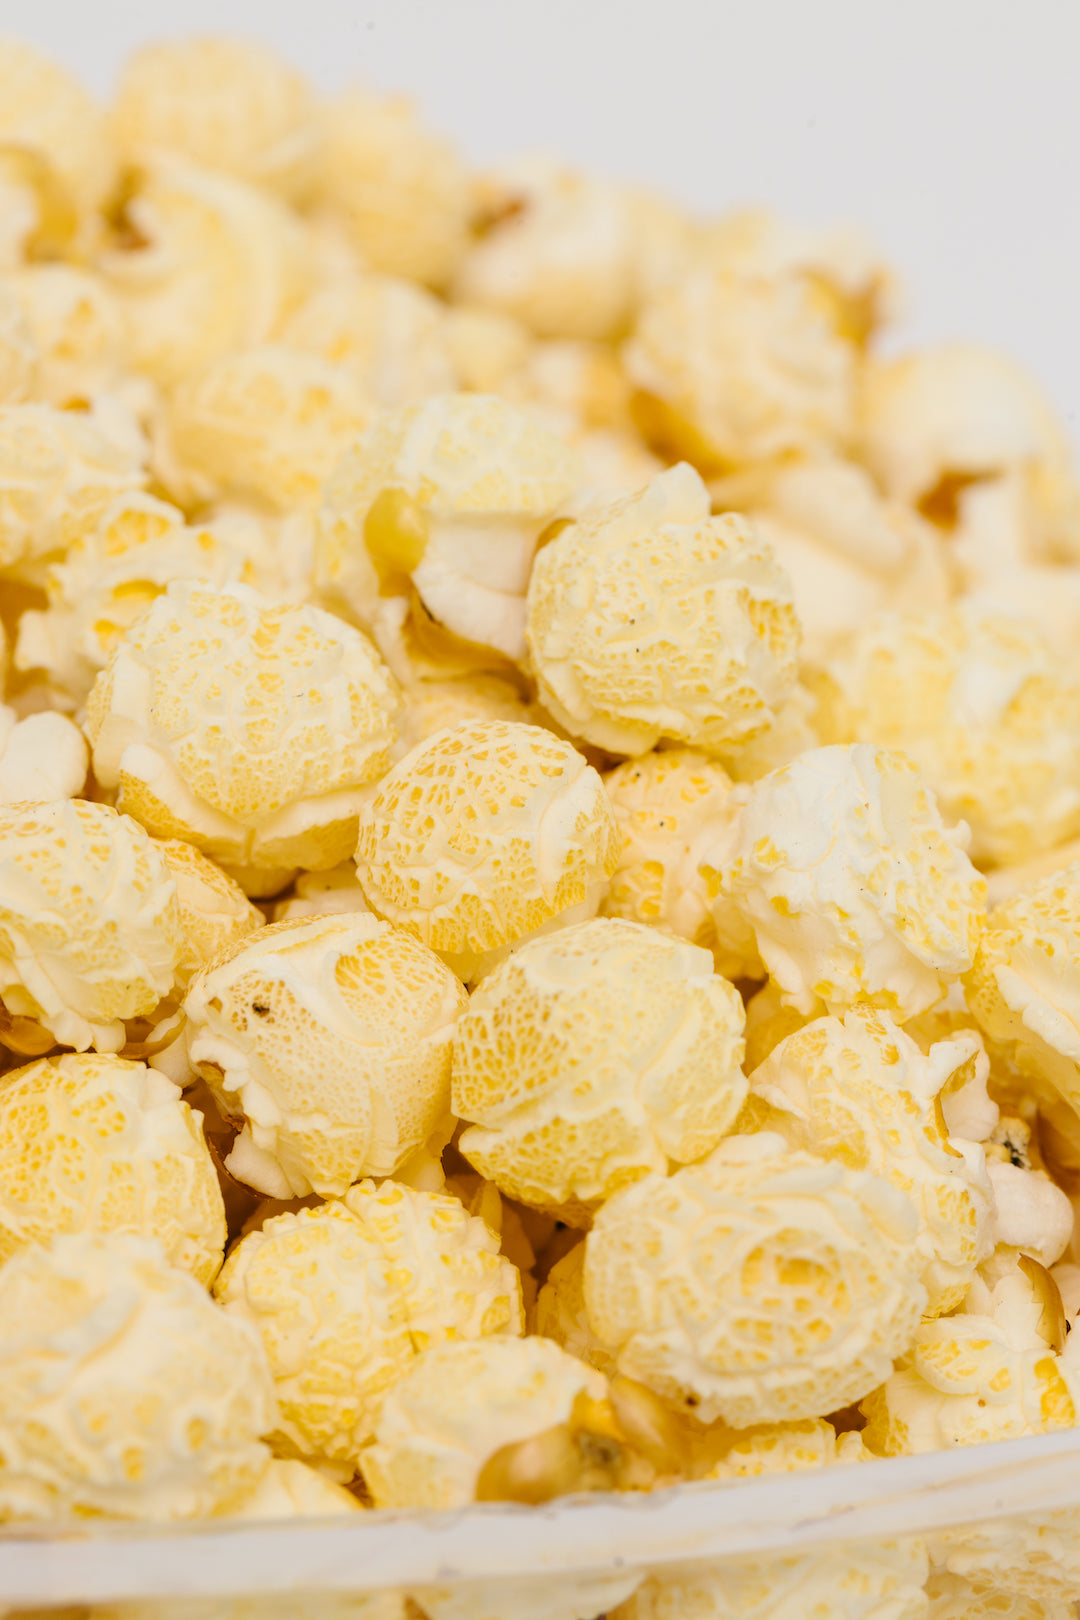 8lbs Mushroom Shaped Unpopped Popcorn Kernels